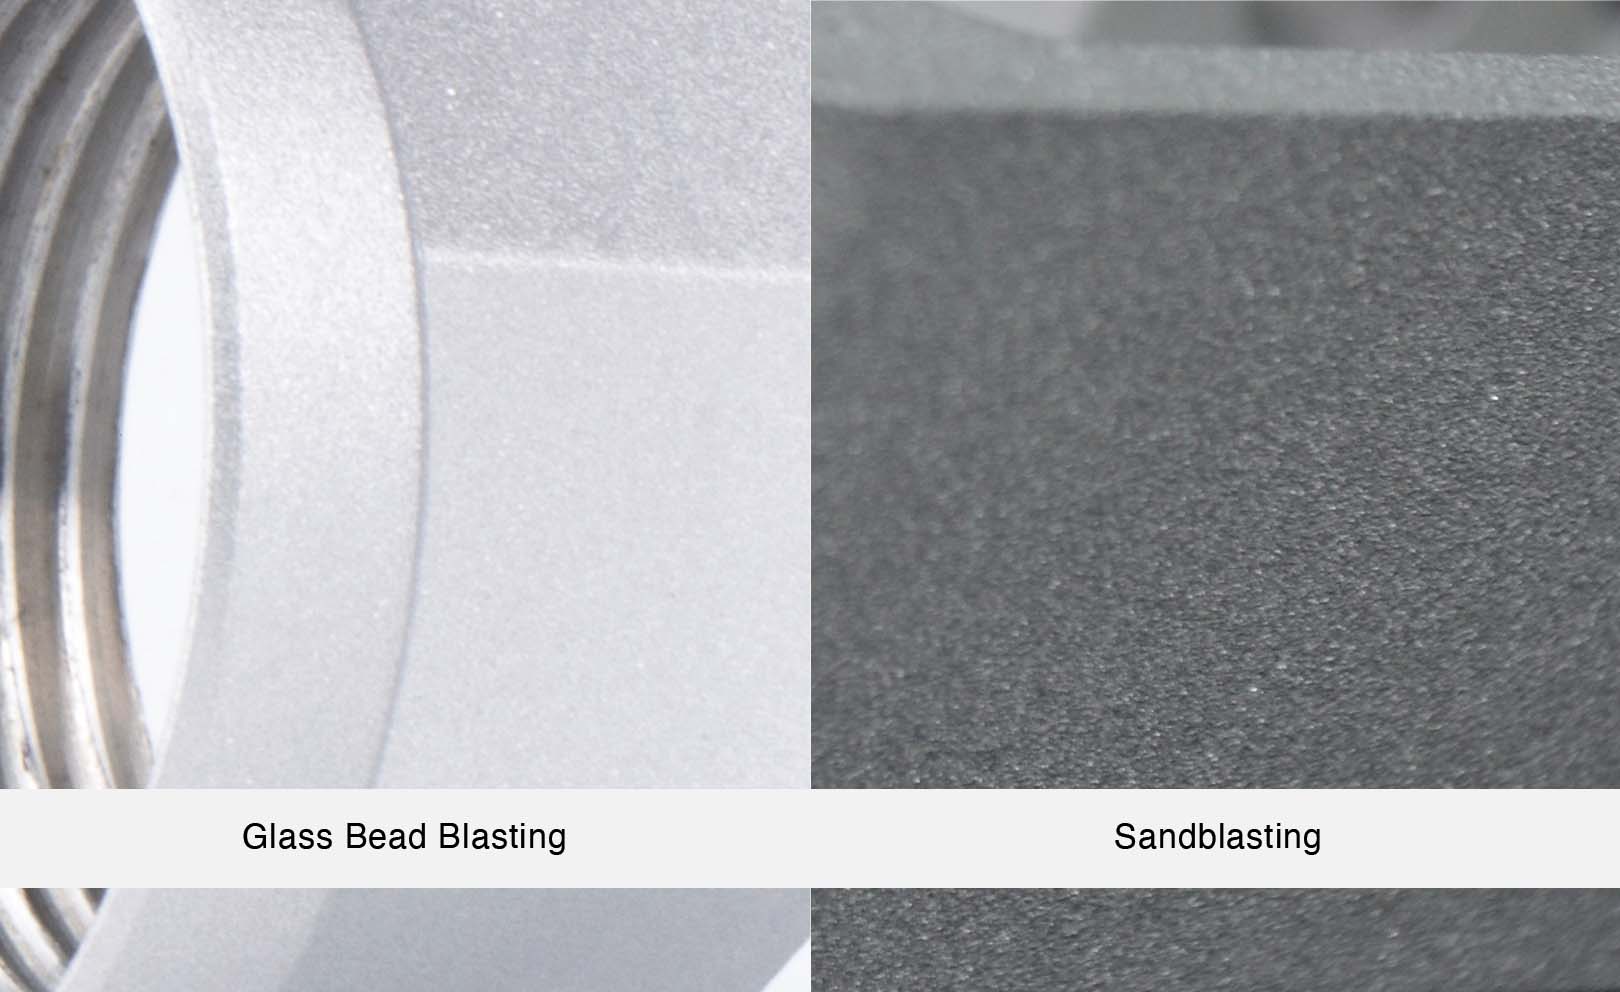 Sandblasting vs Glass Bead Blasting: Which is Better?